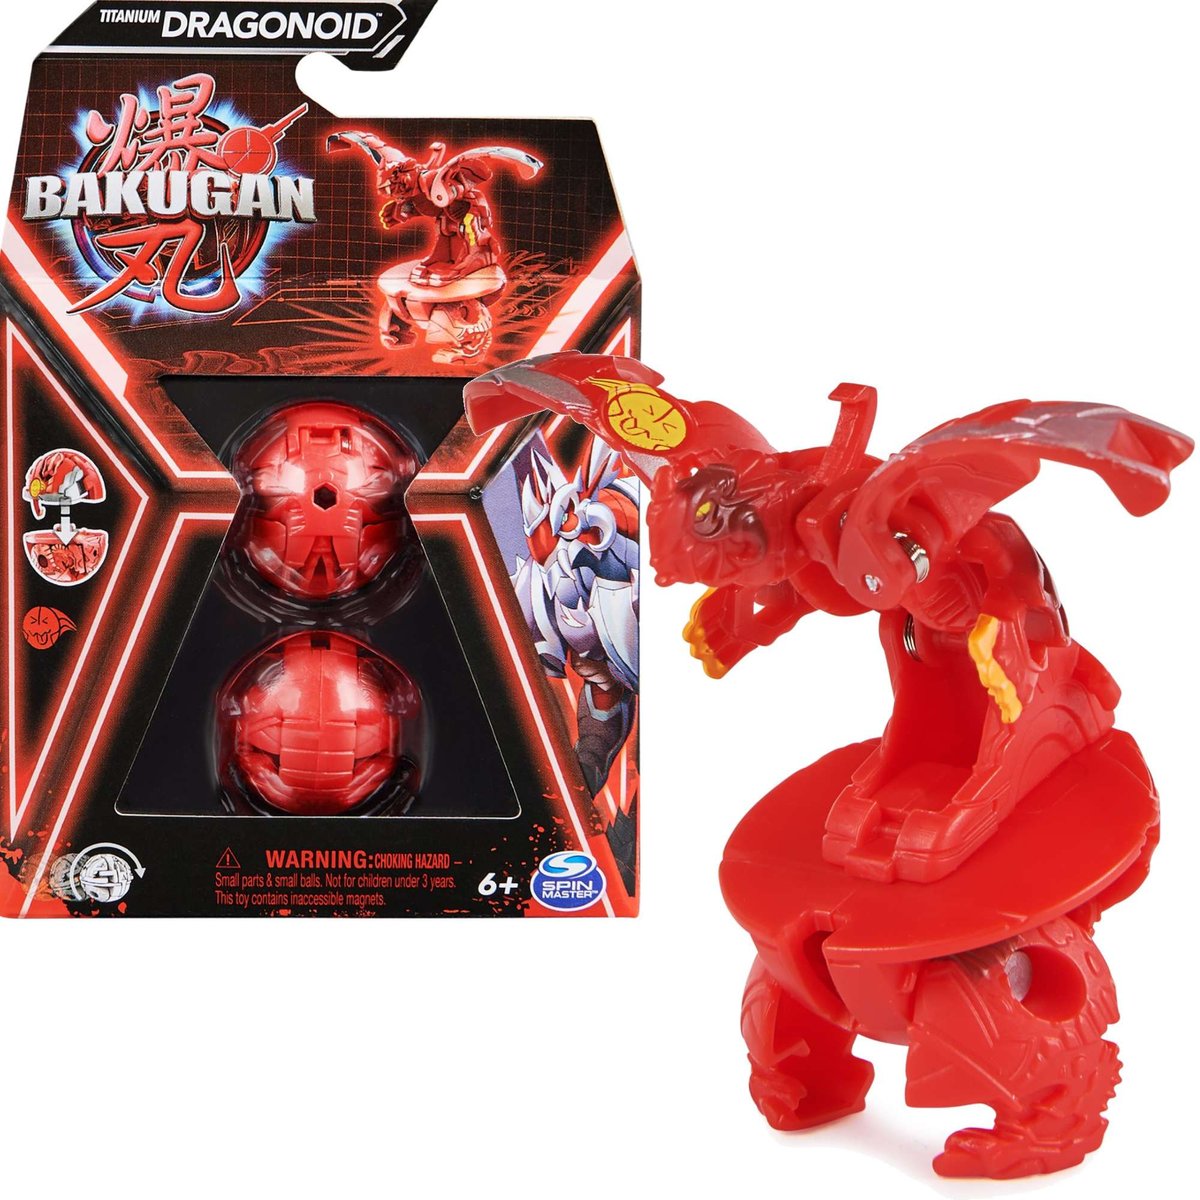 Bakugan Titanium Dragonoid Czerwona Figurka Bitewna Transformująca + Karty